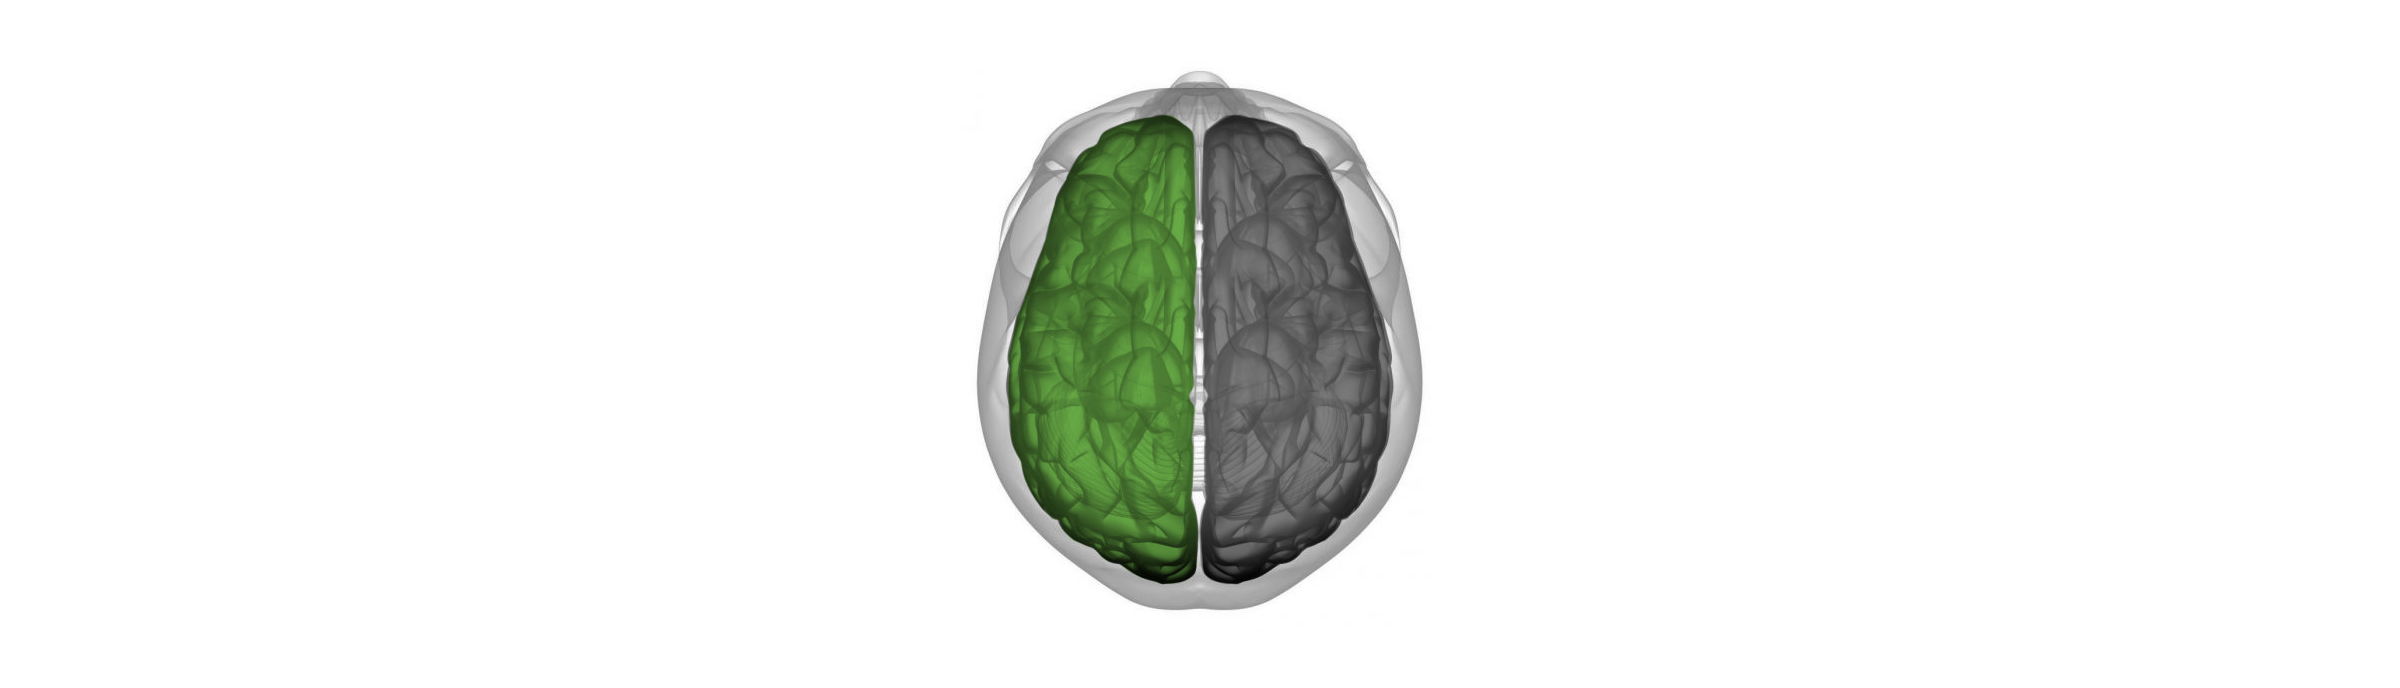 Brain 03